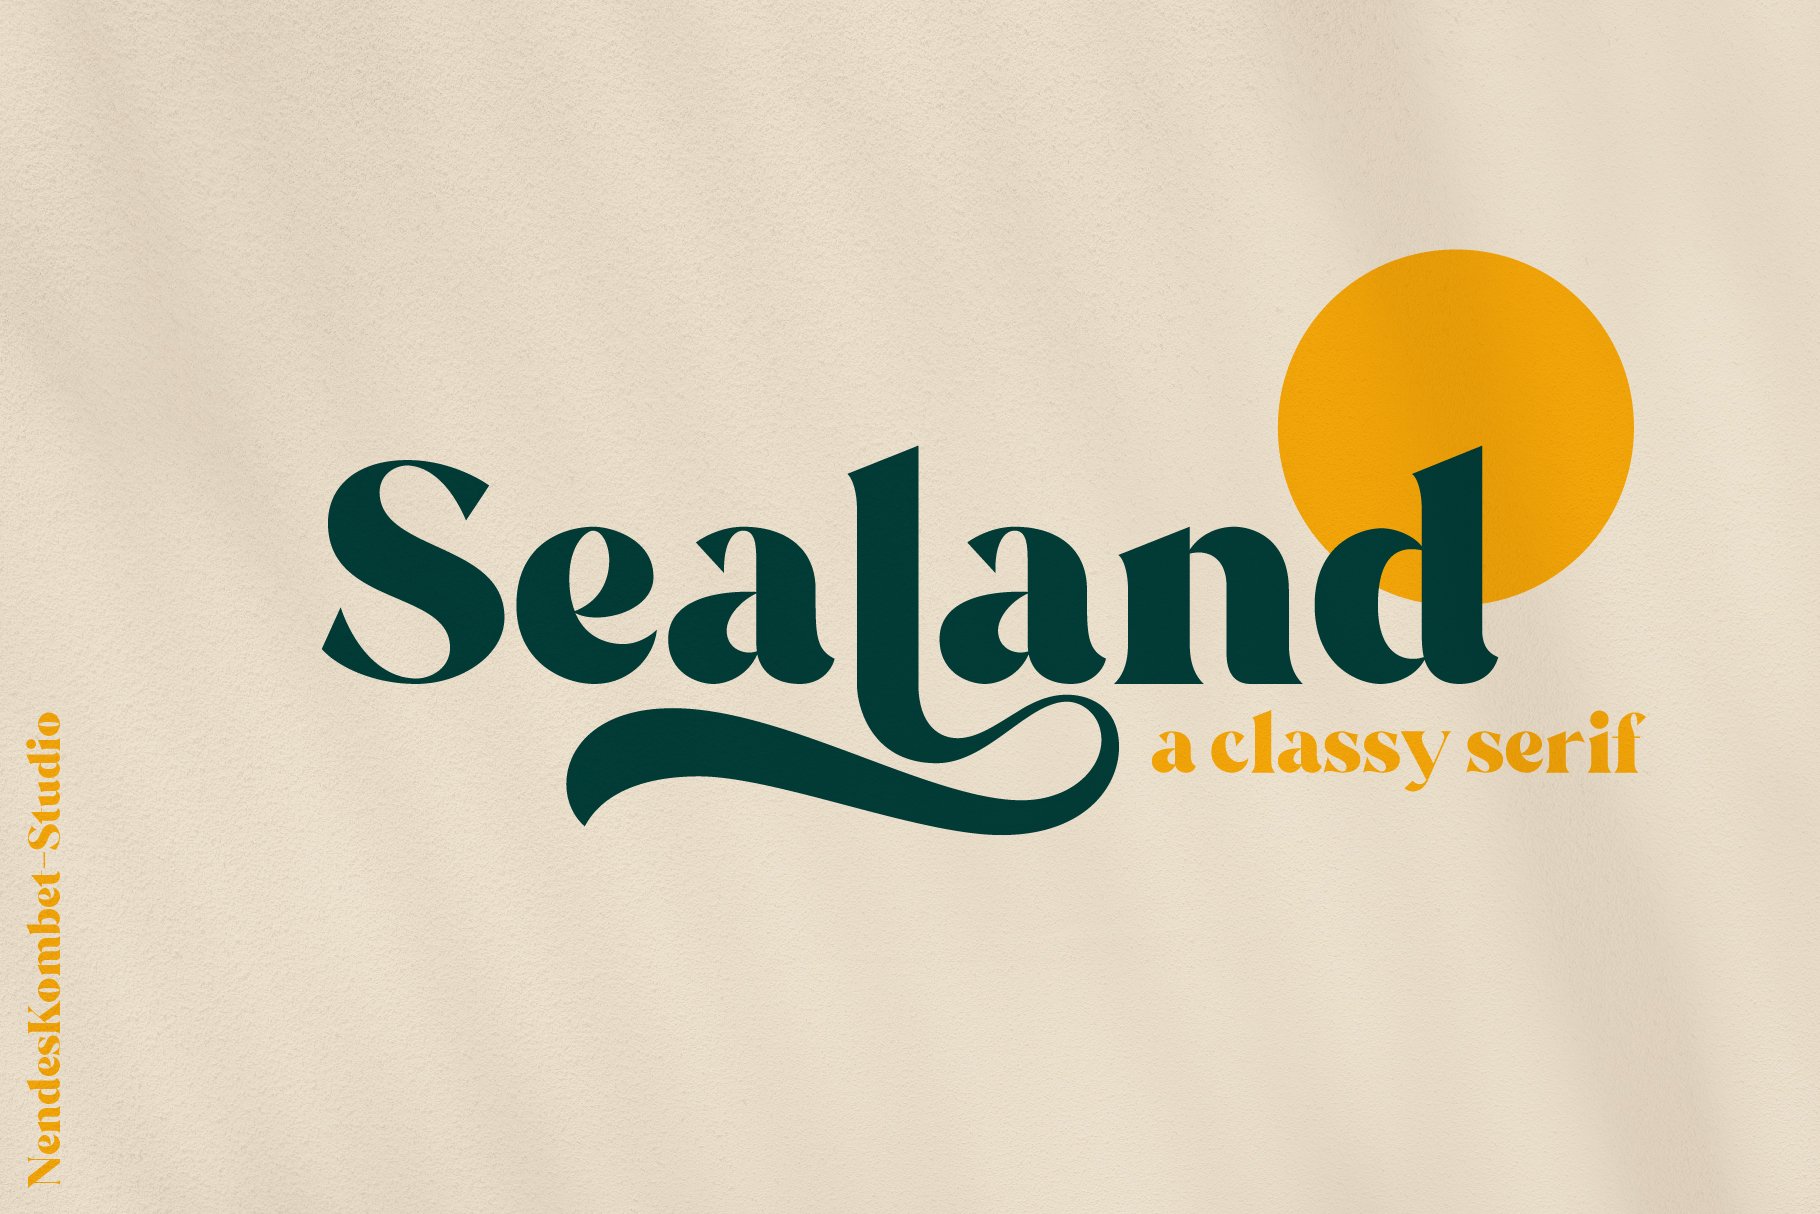 Sealand - a classy serif cover image.